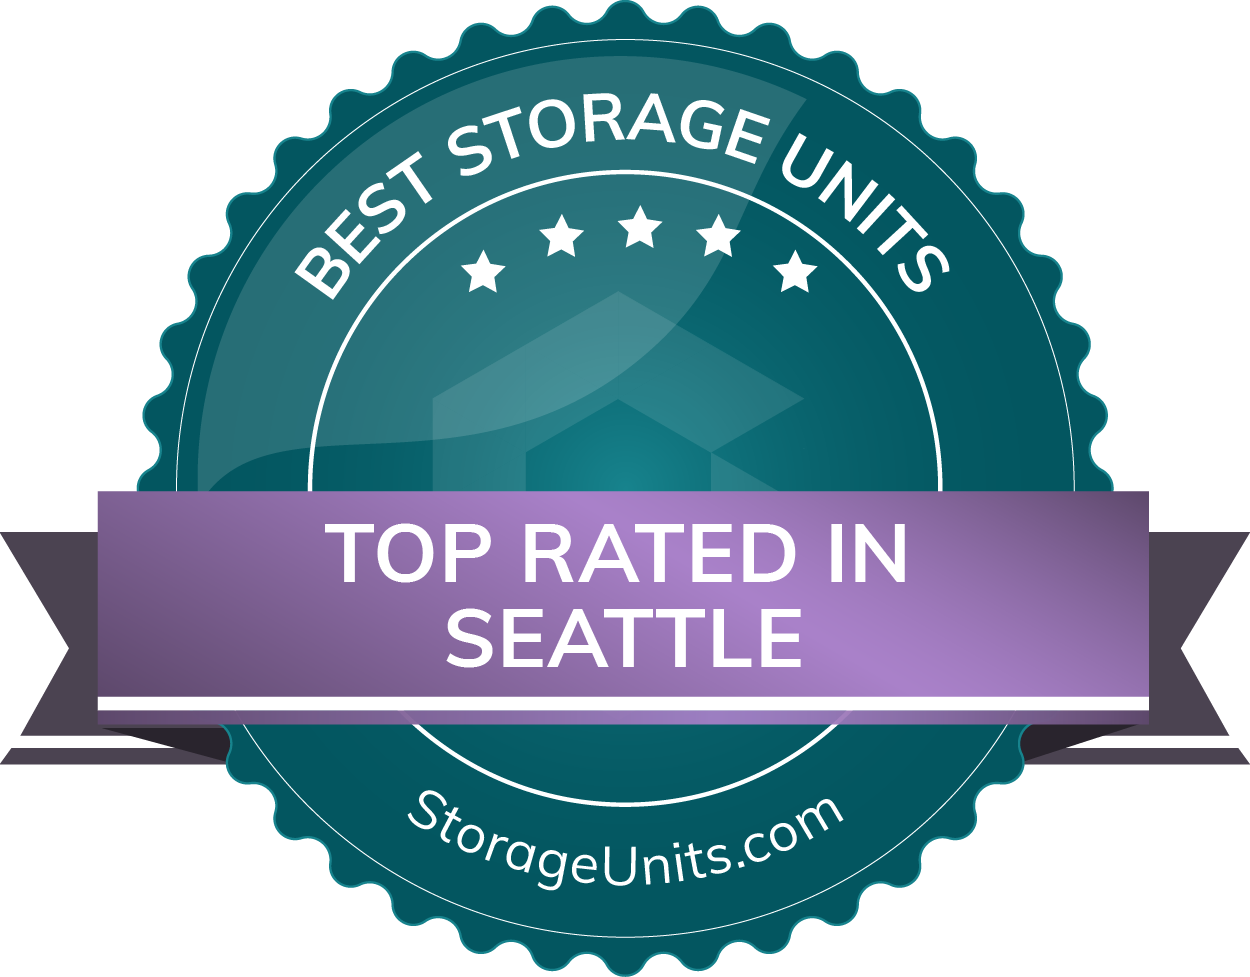 Best Self Storage Units in Seattle, Washington of 2022